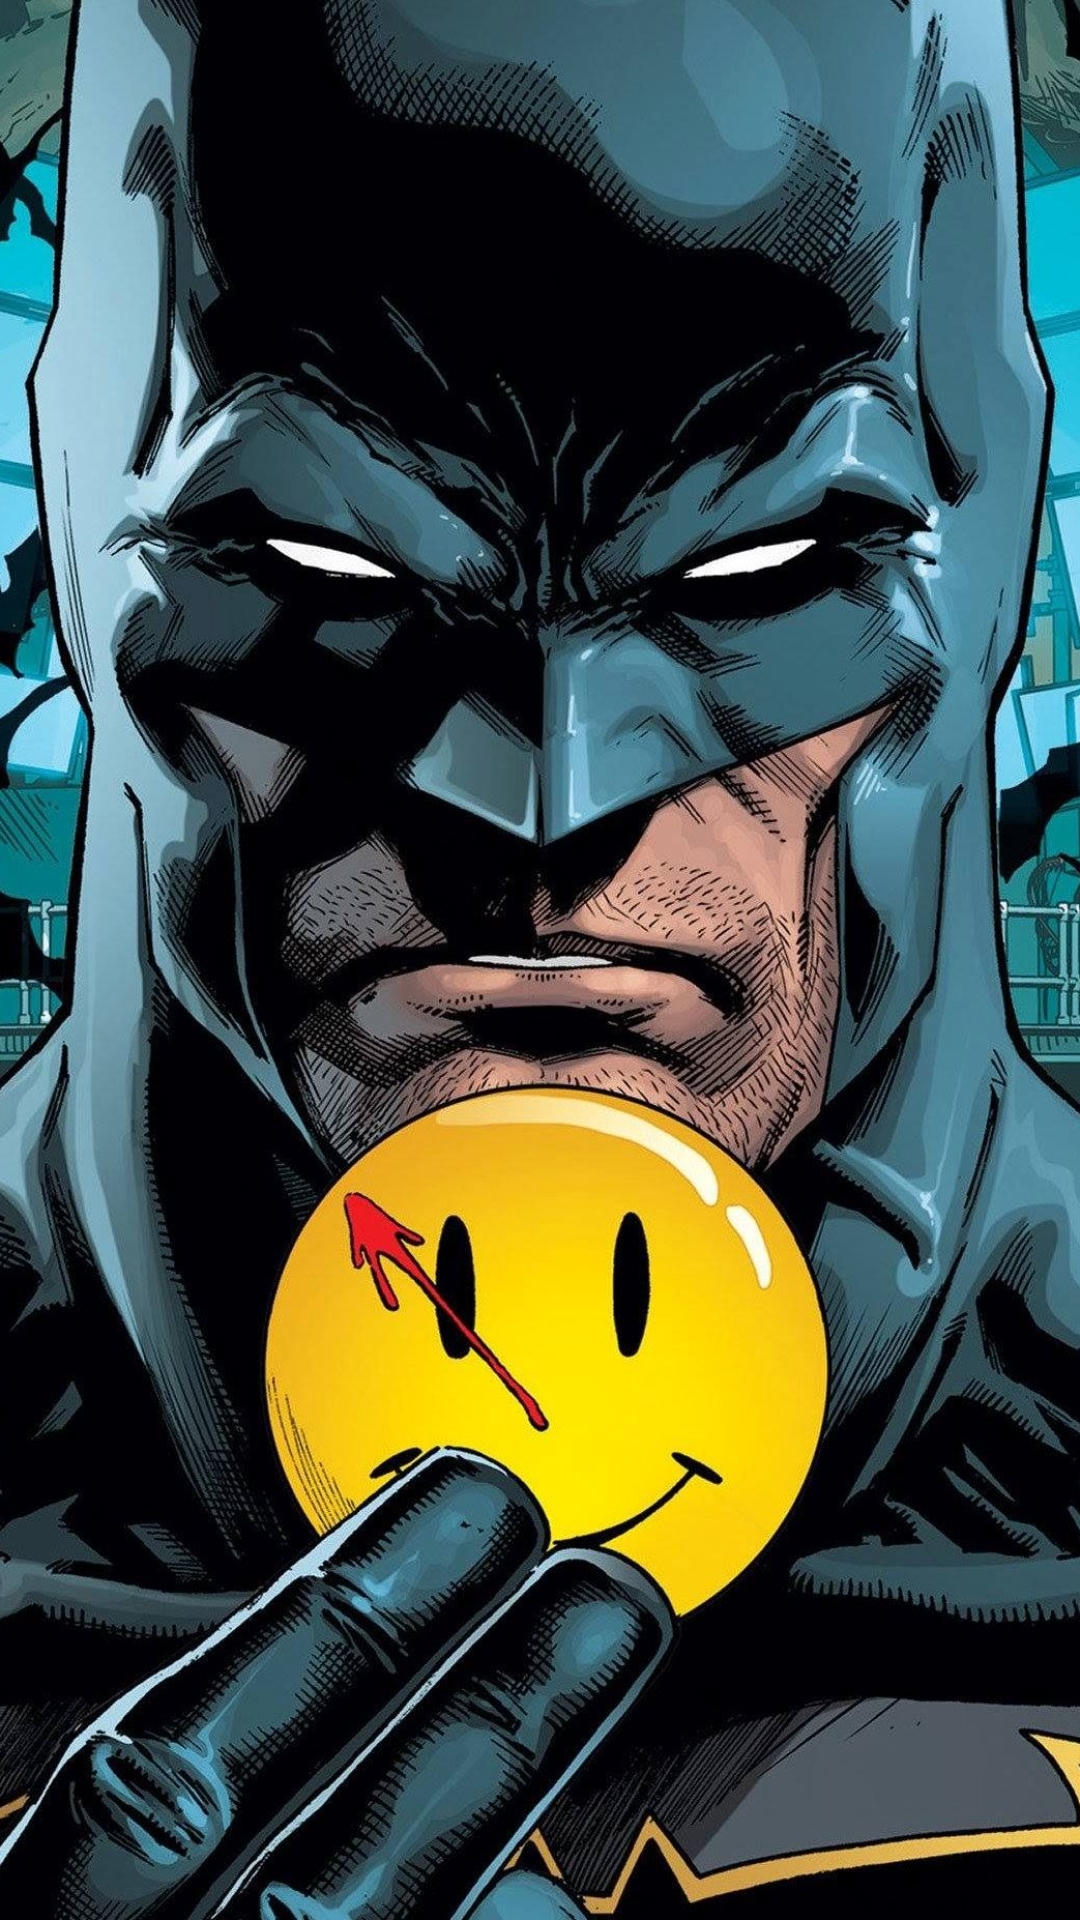 Скачать картинку Комиксы, Хранители, Бэтмен, Бэтмен/флэш: Кнопка, Сторожа в телефон бесплатно.